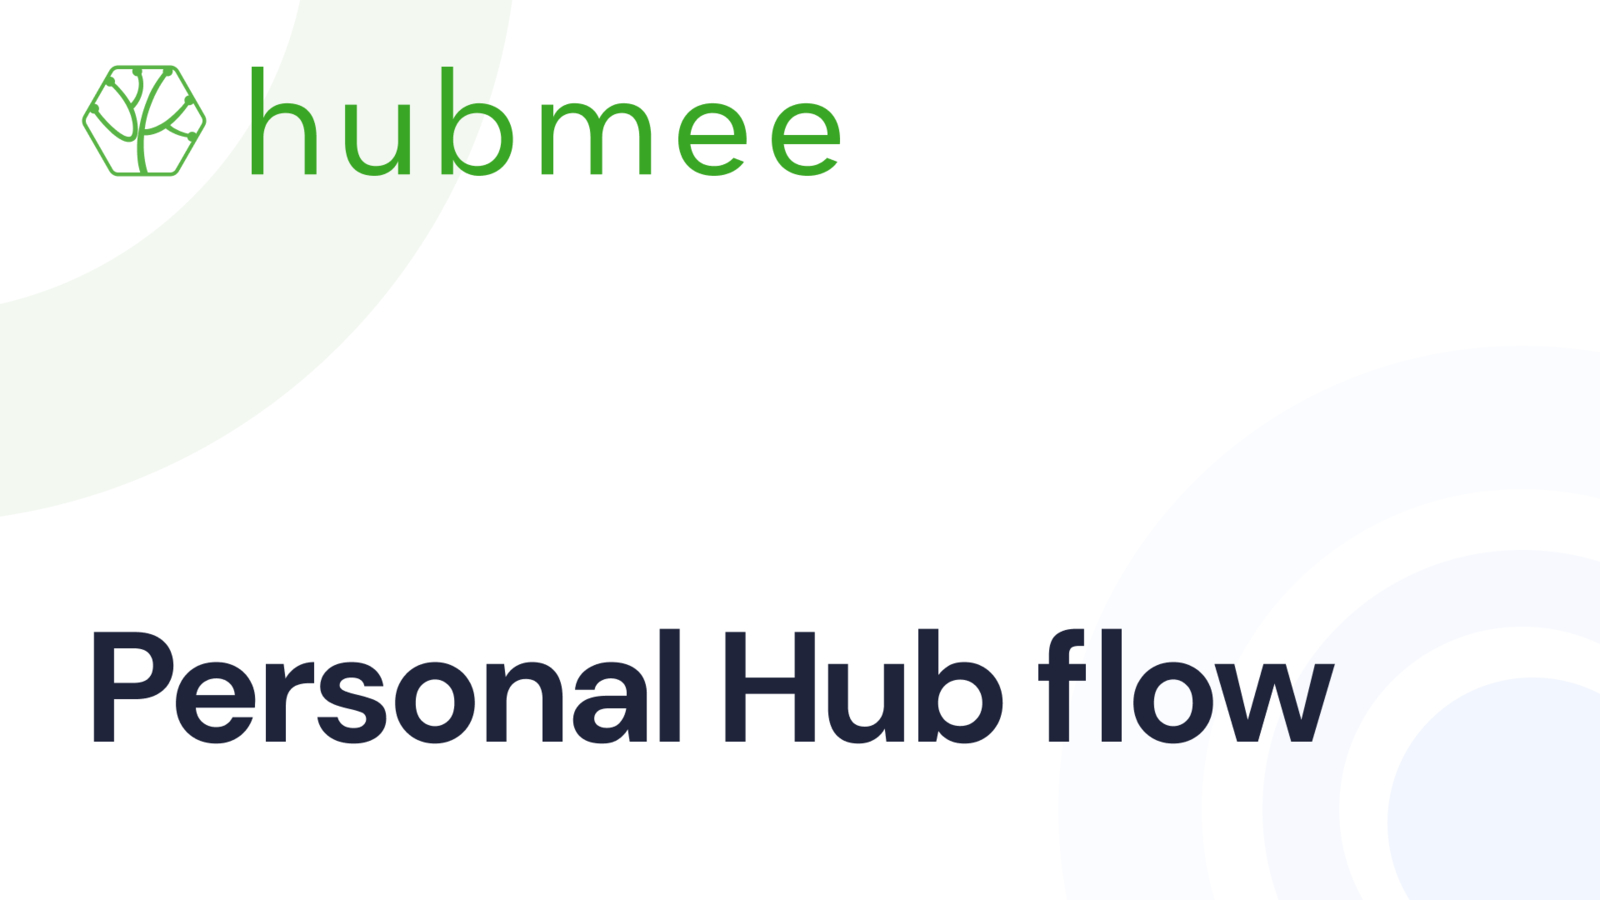 Personal Hub flow